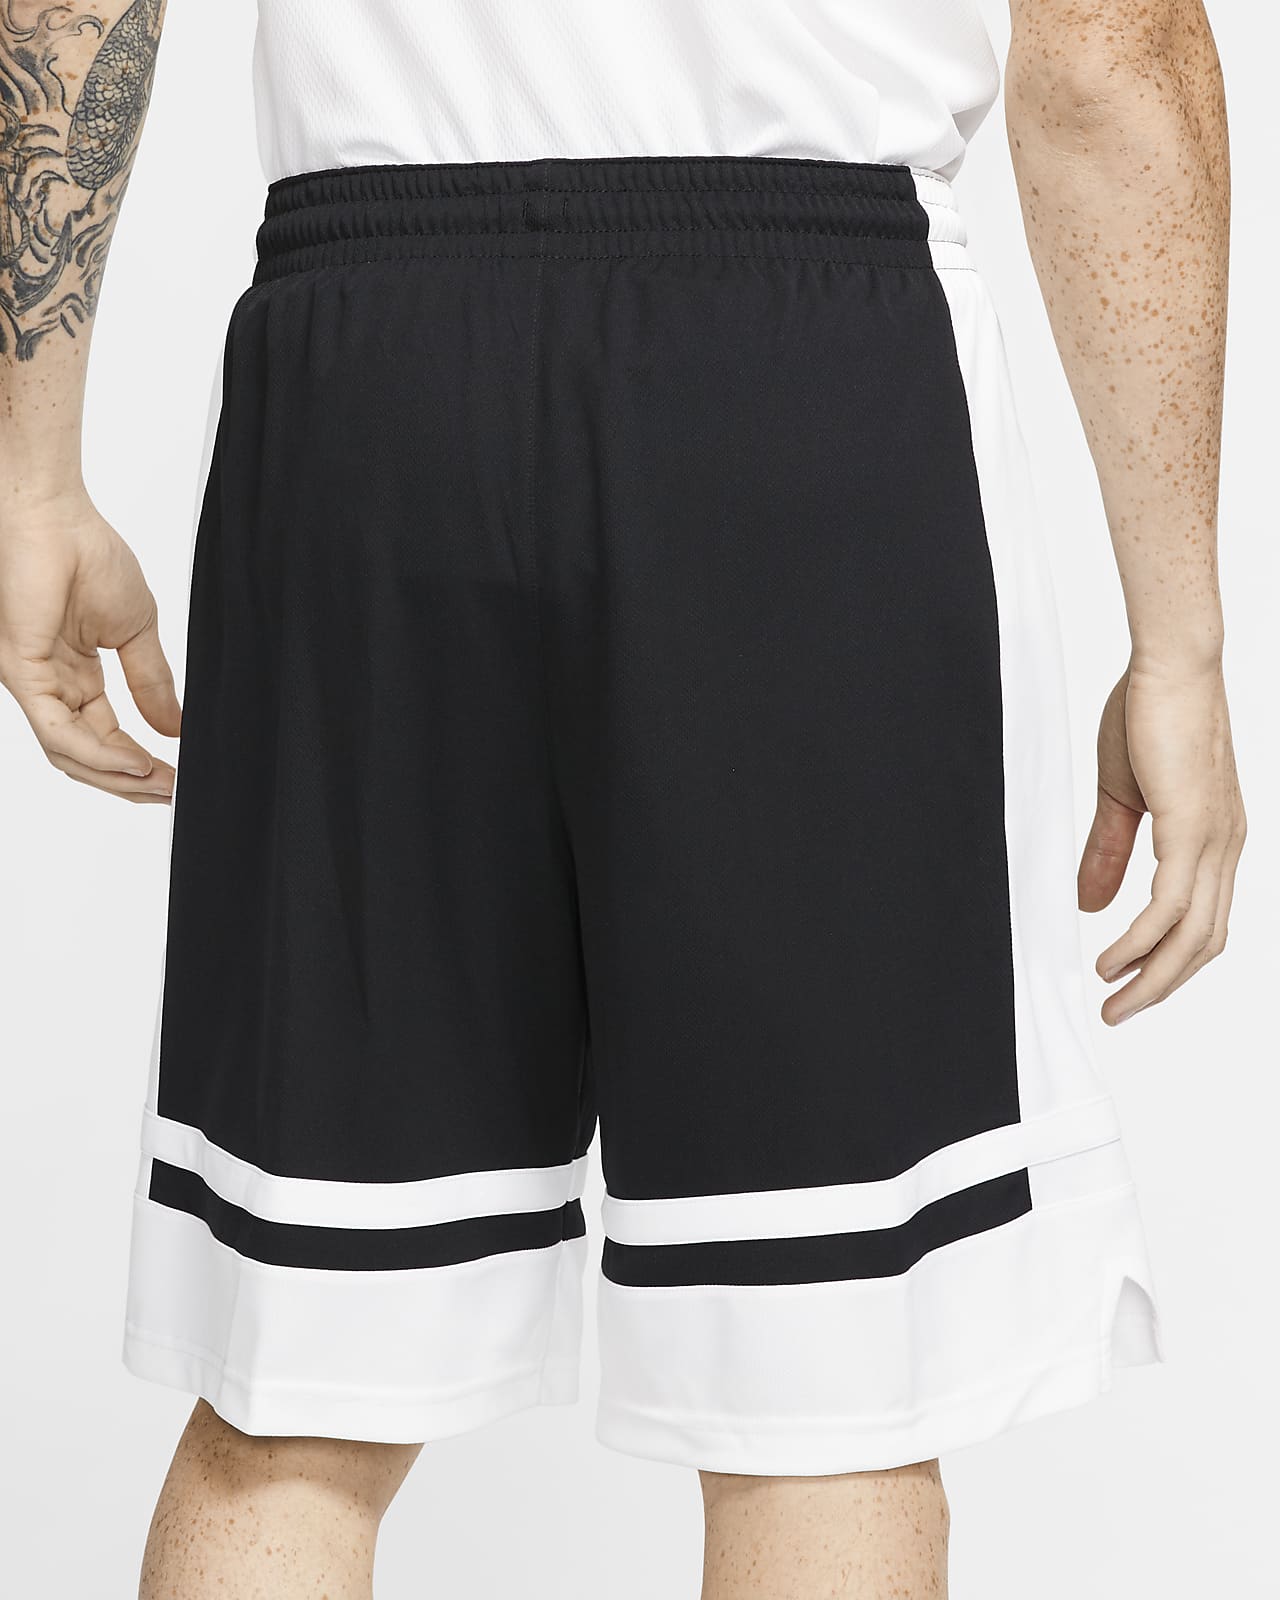 Nike Elite Men's Basketball Shorts 